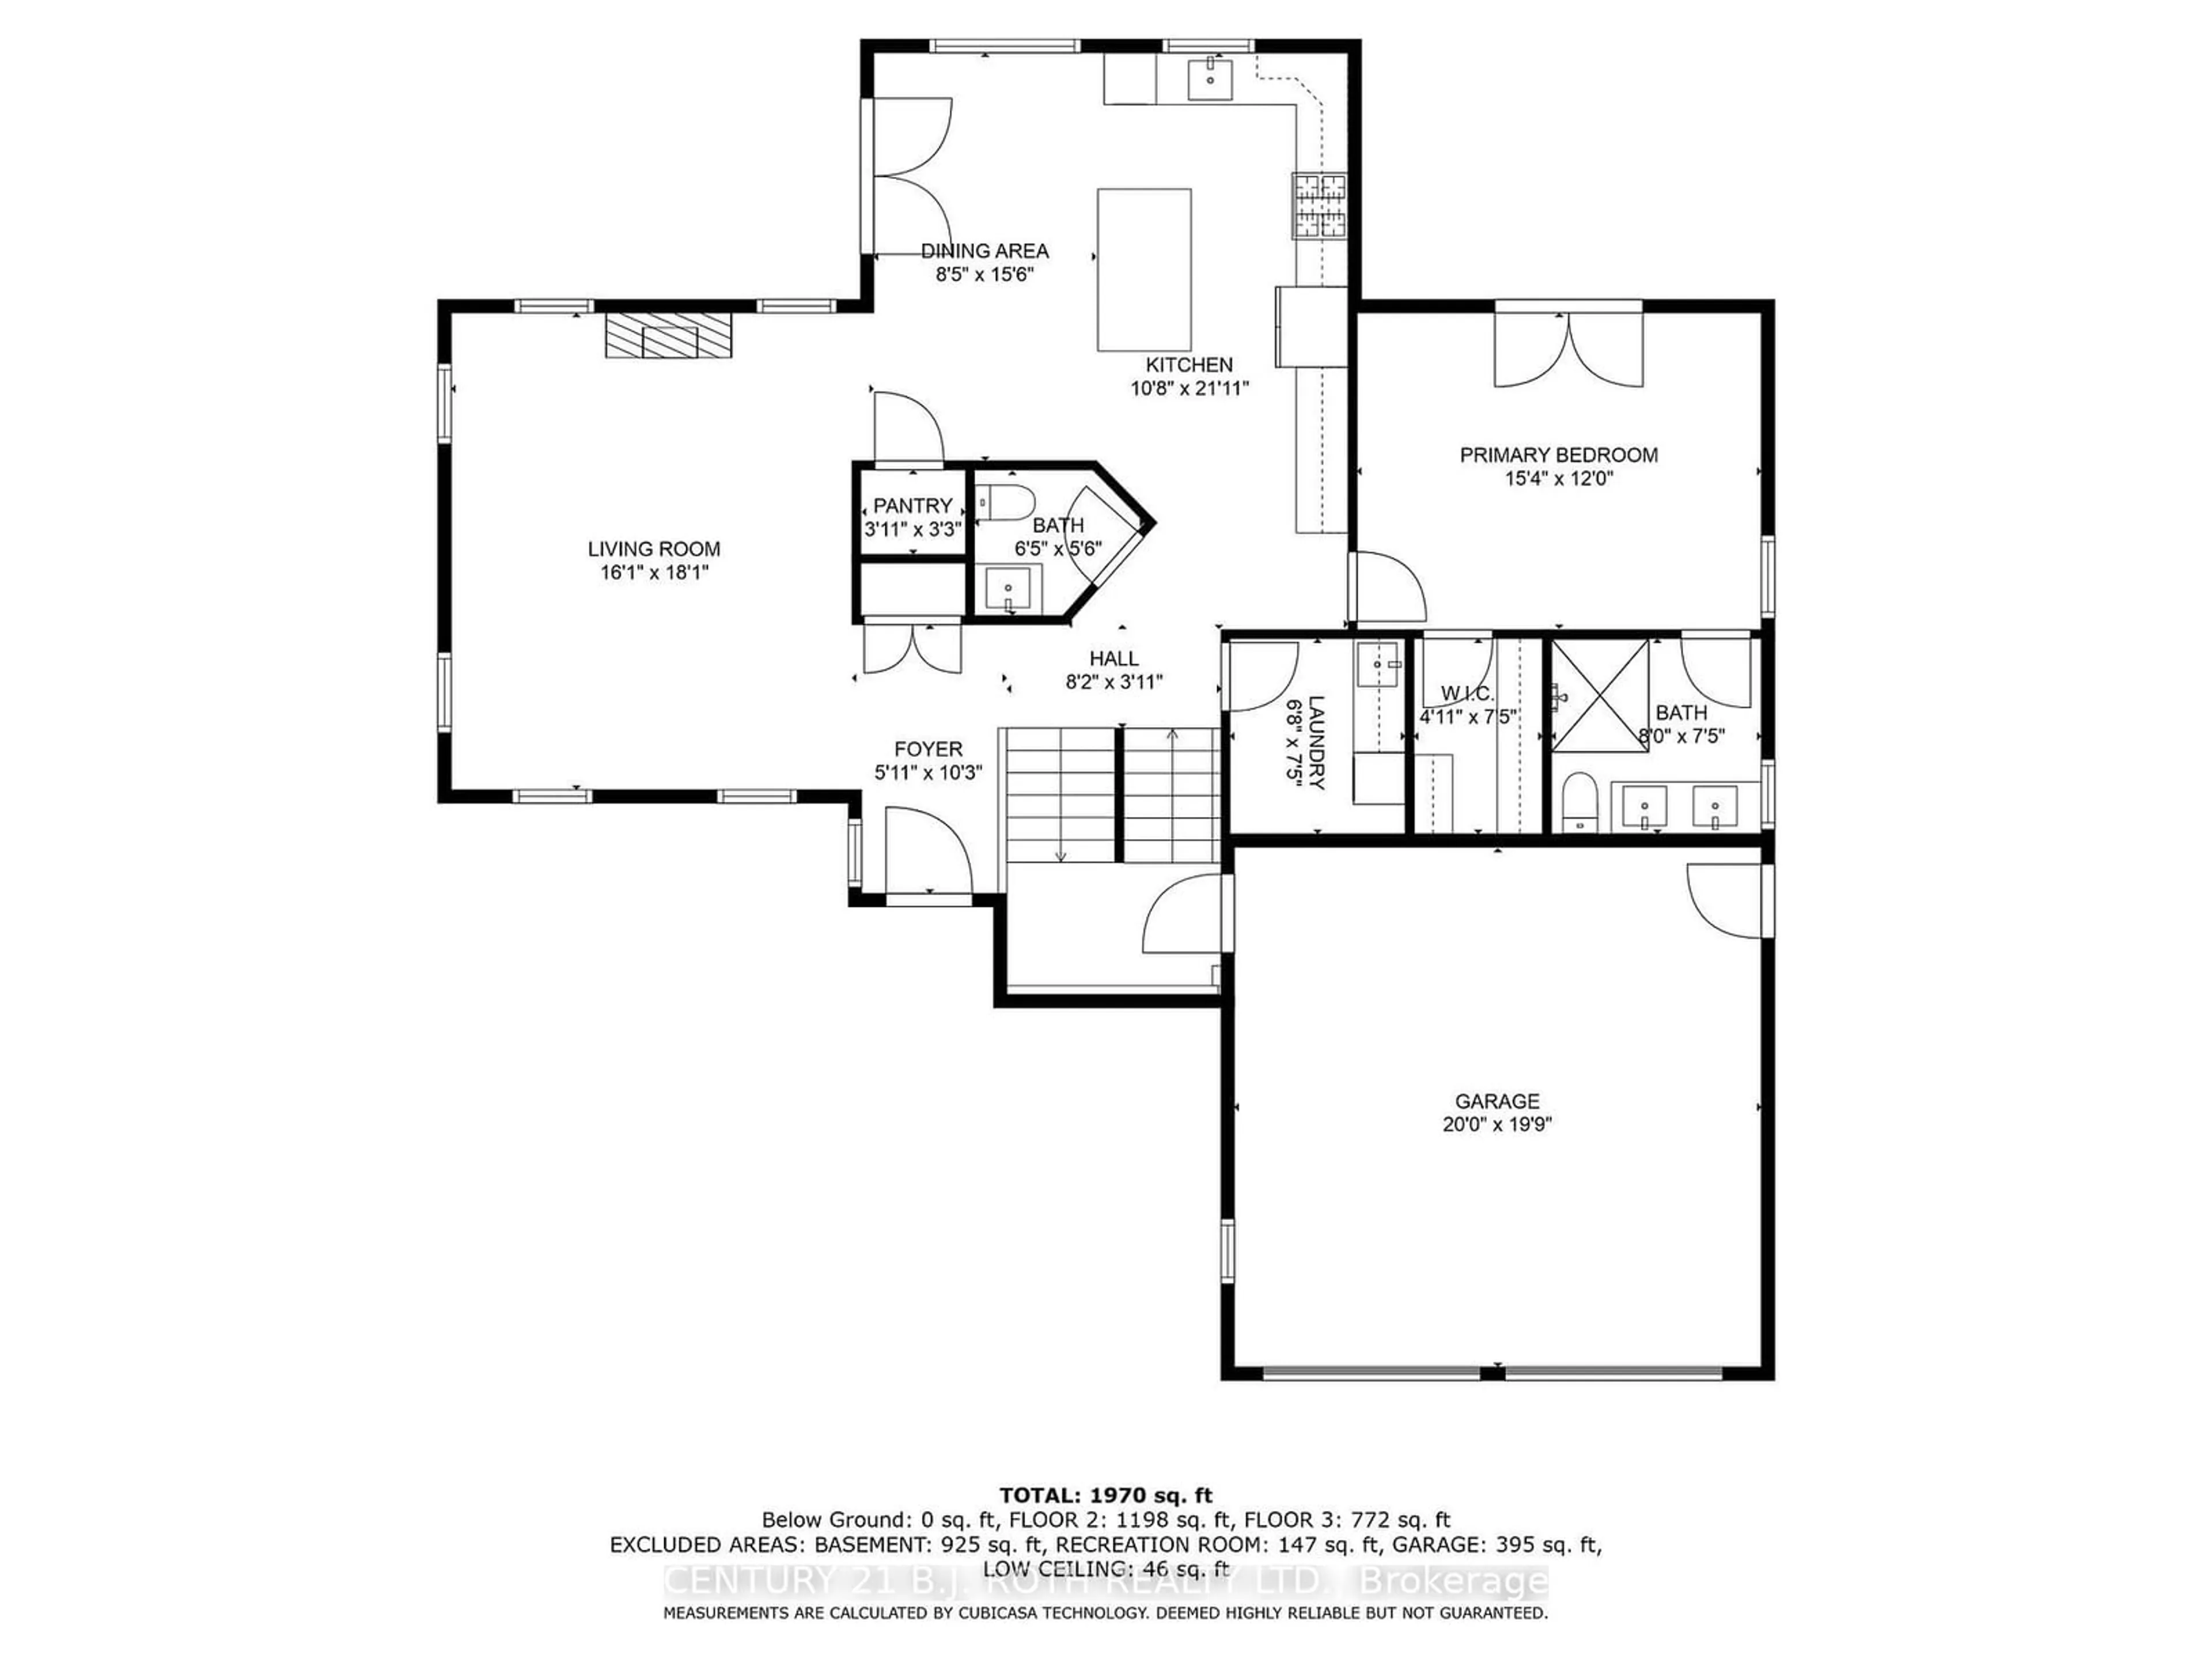 Floor plan for 3568 Shadow Creek Rd, Severn Ontario L3V 6H3